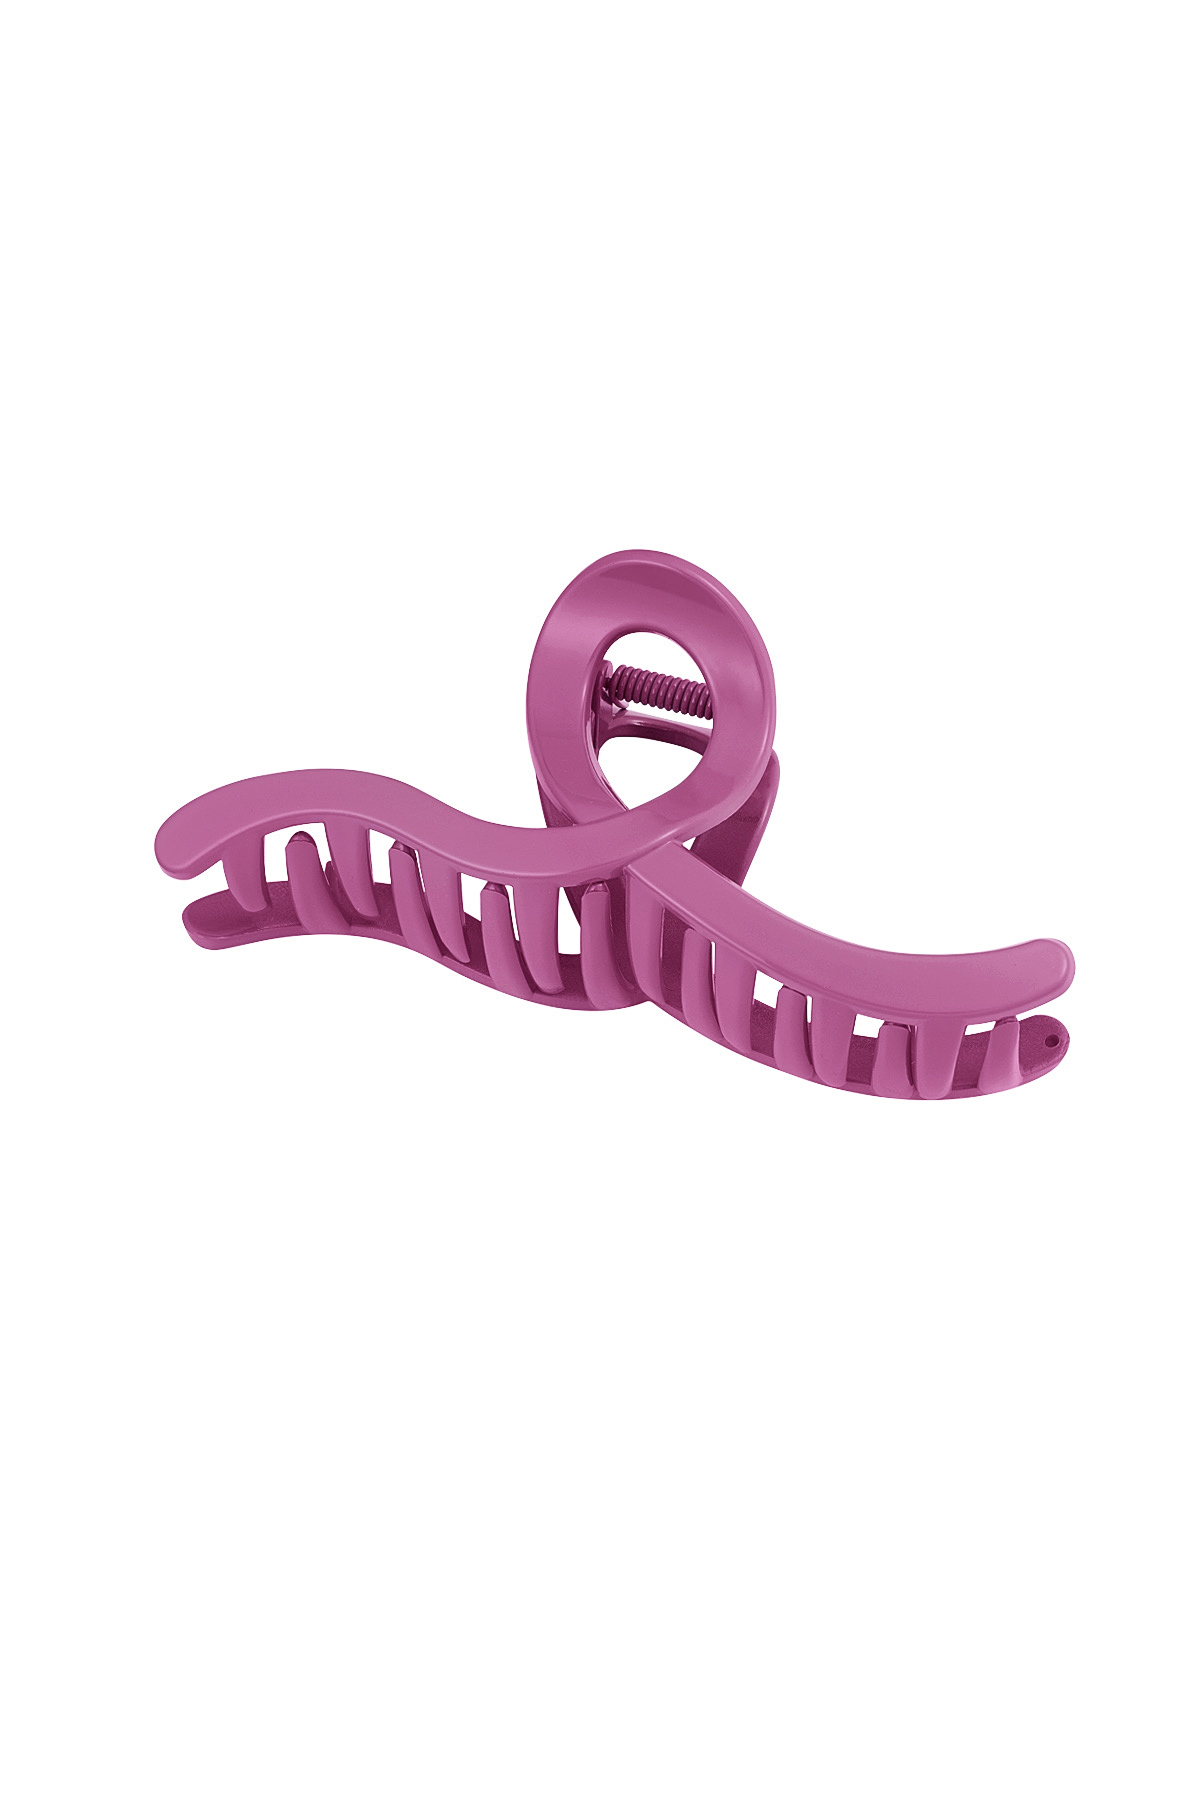 Hair clip swing - pink 